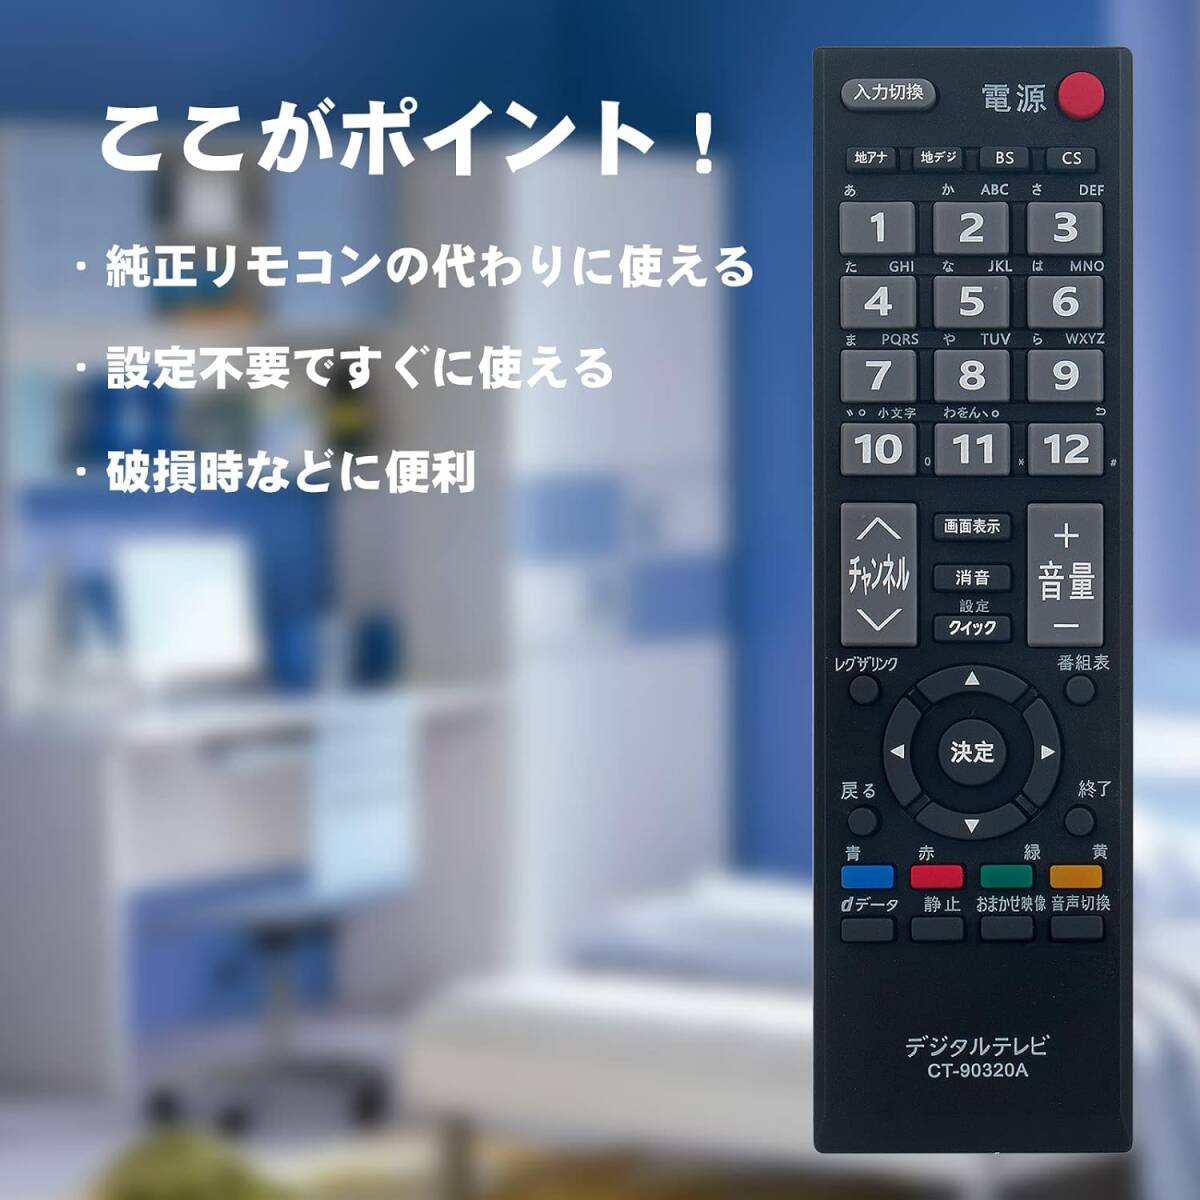 テレビ用リモコン fit for 東芝 CT-90320A 40A1 32A1 26A1 22A1 19A1 32A1S 32A1_画像3